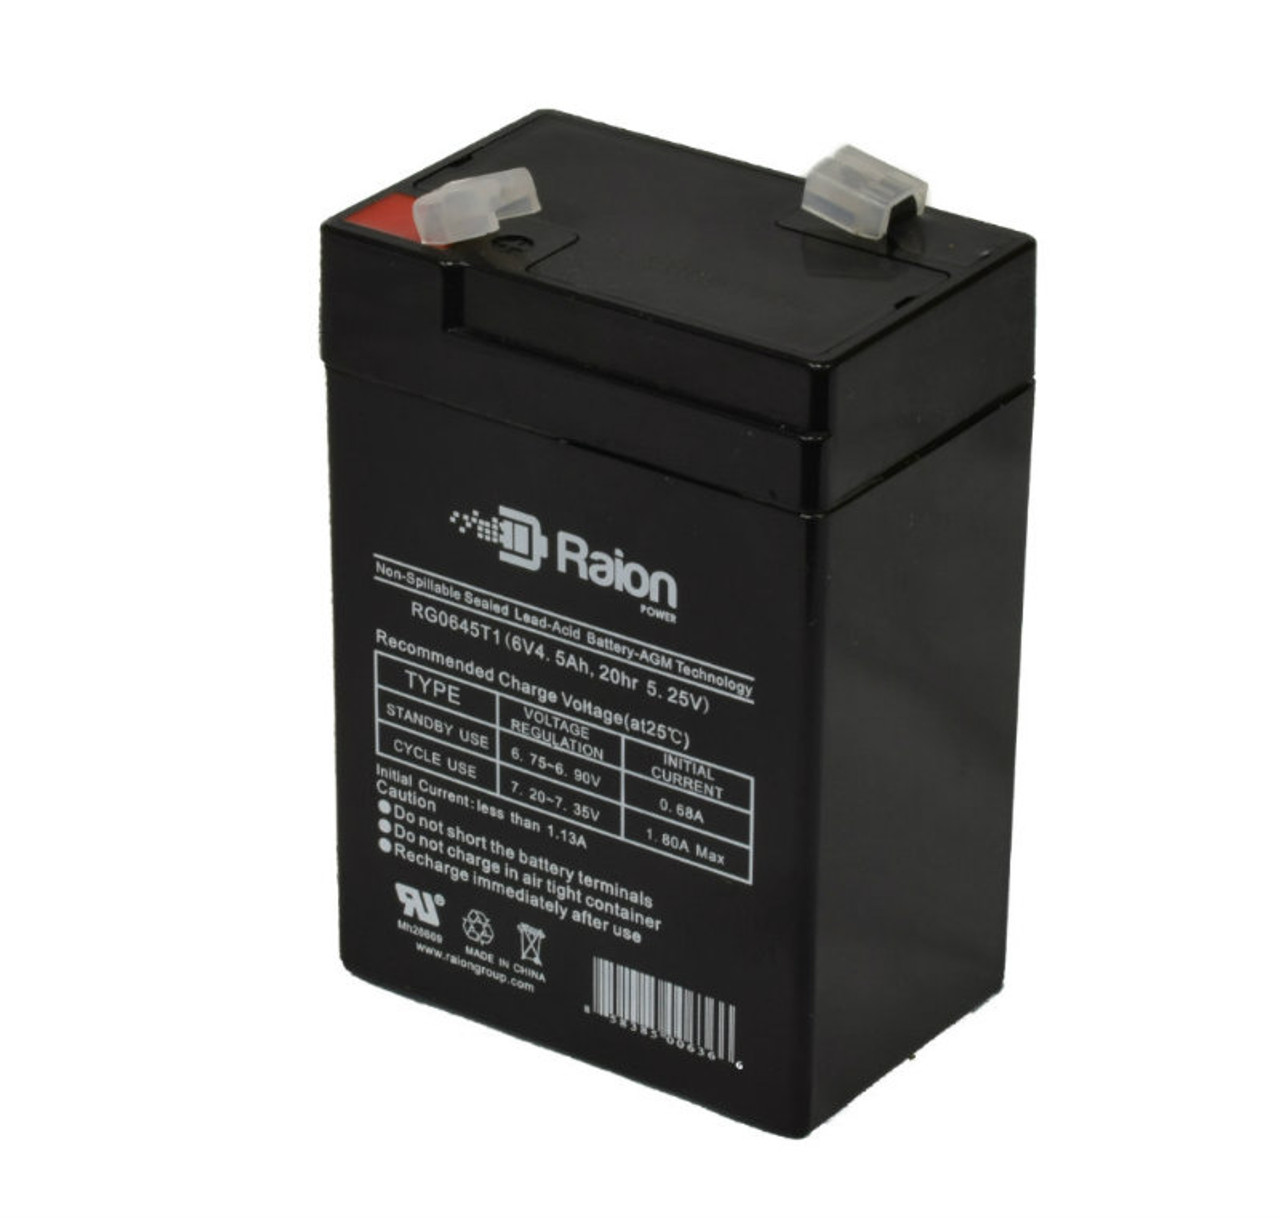 Raion Power RG0645T1 6V 4.5Ah Replacement Battery Cartridge for Sonnenschein A5064